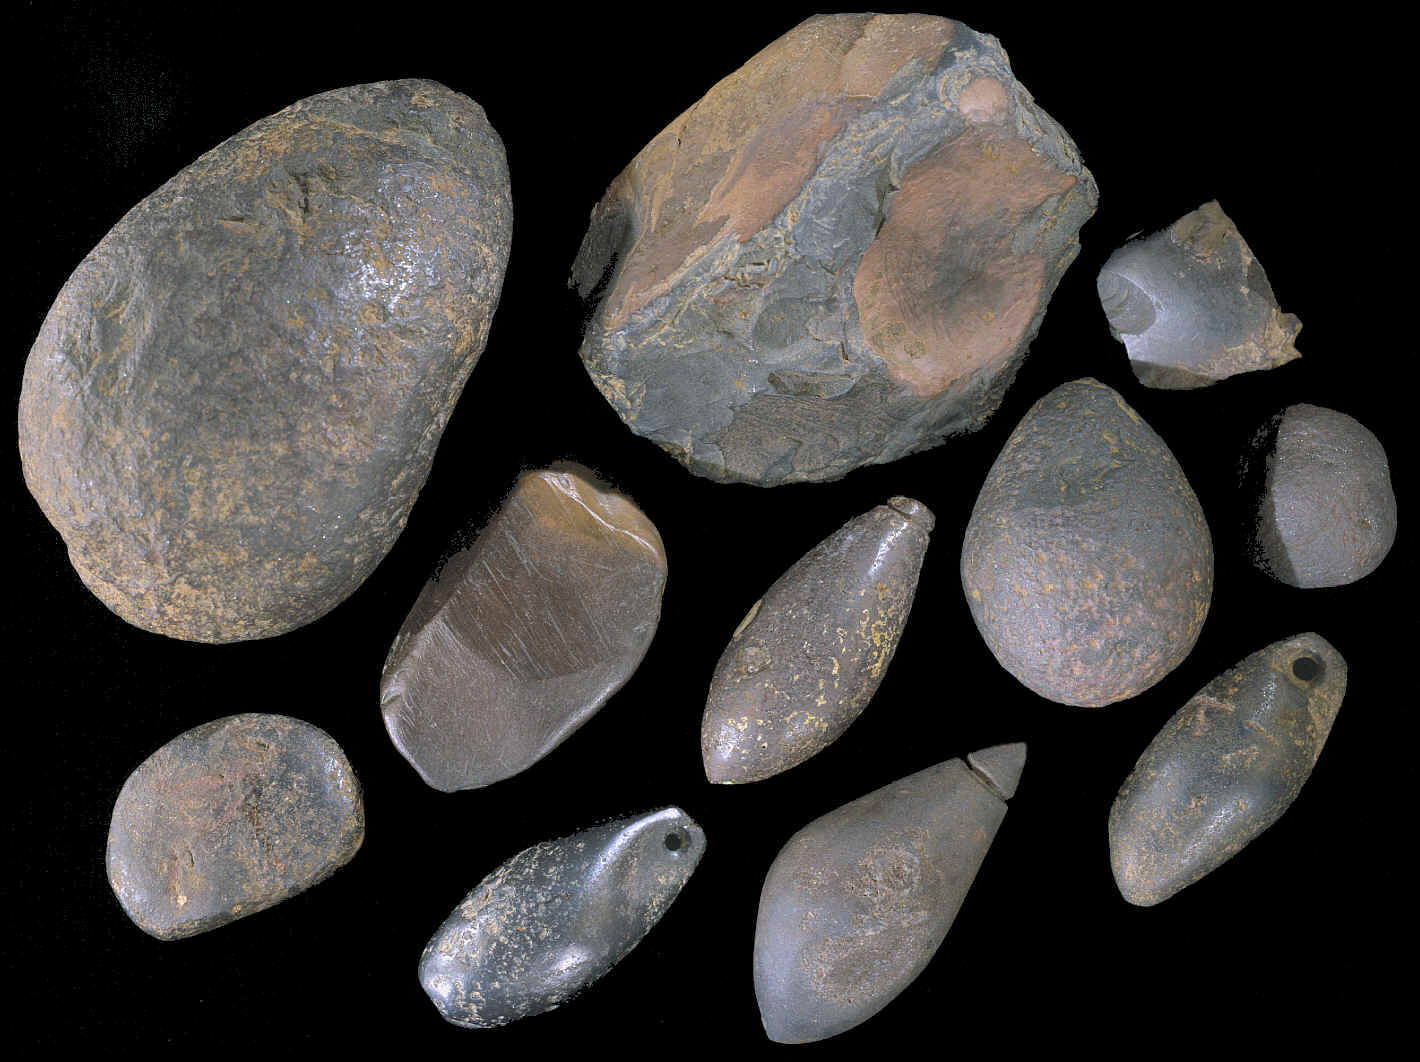 Group of 11 hematite artifacts.